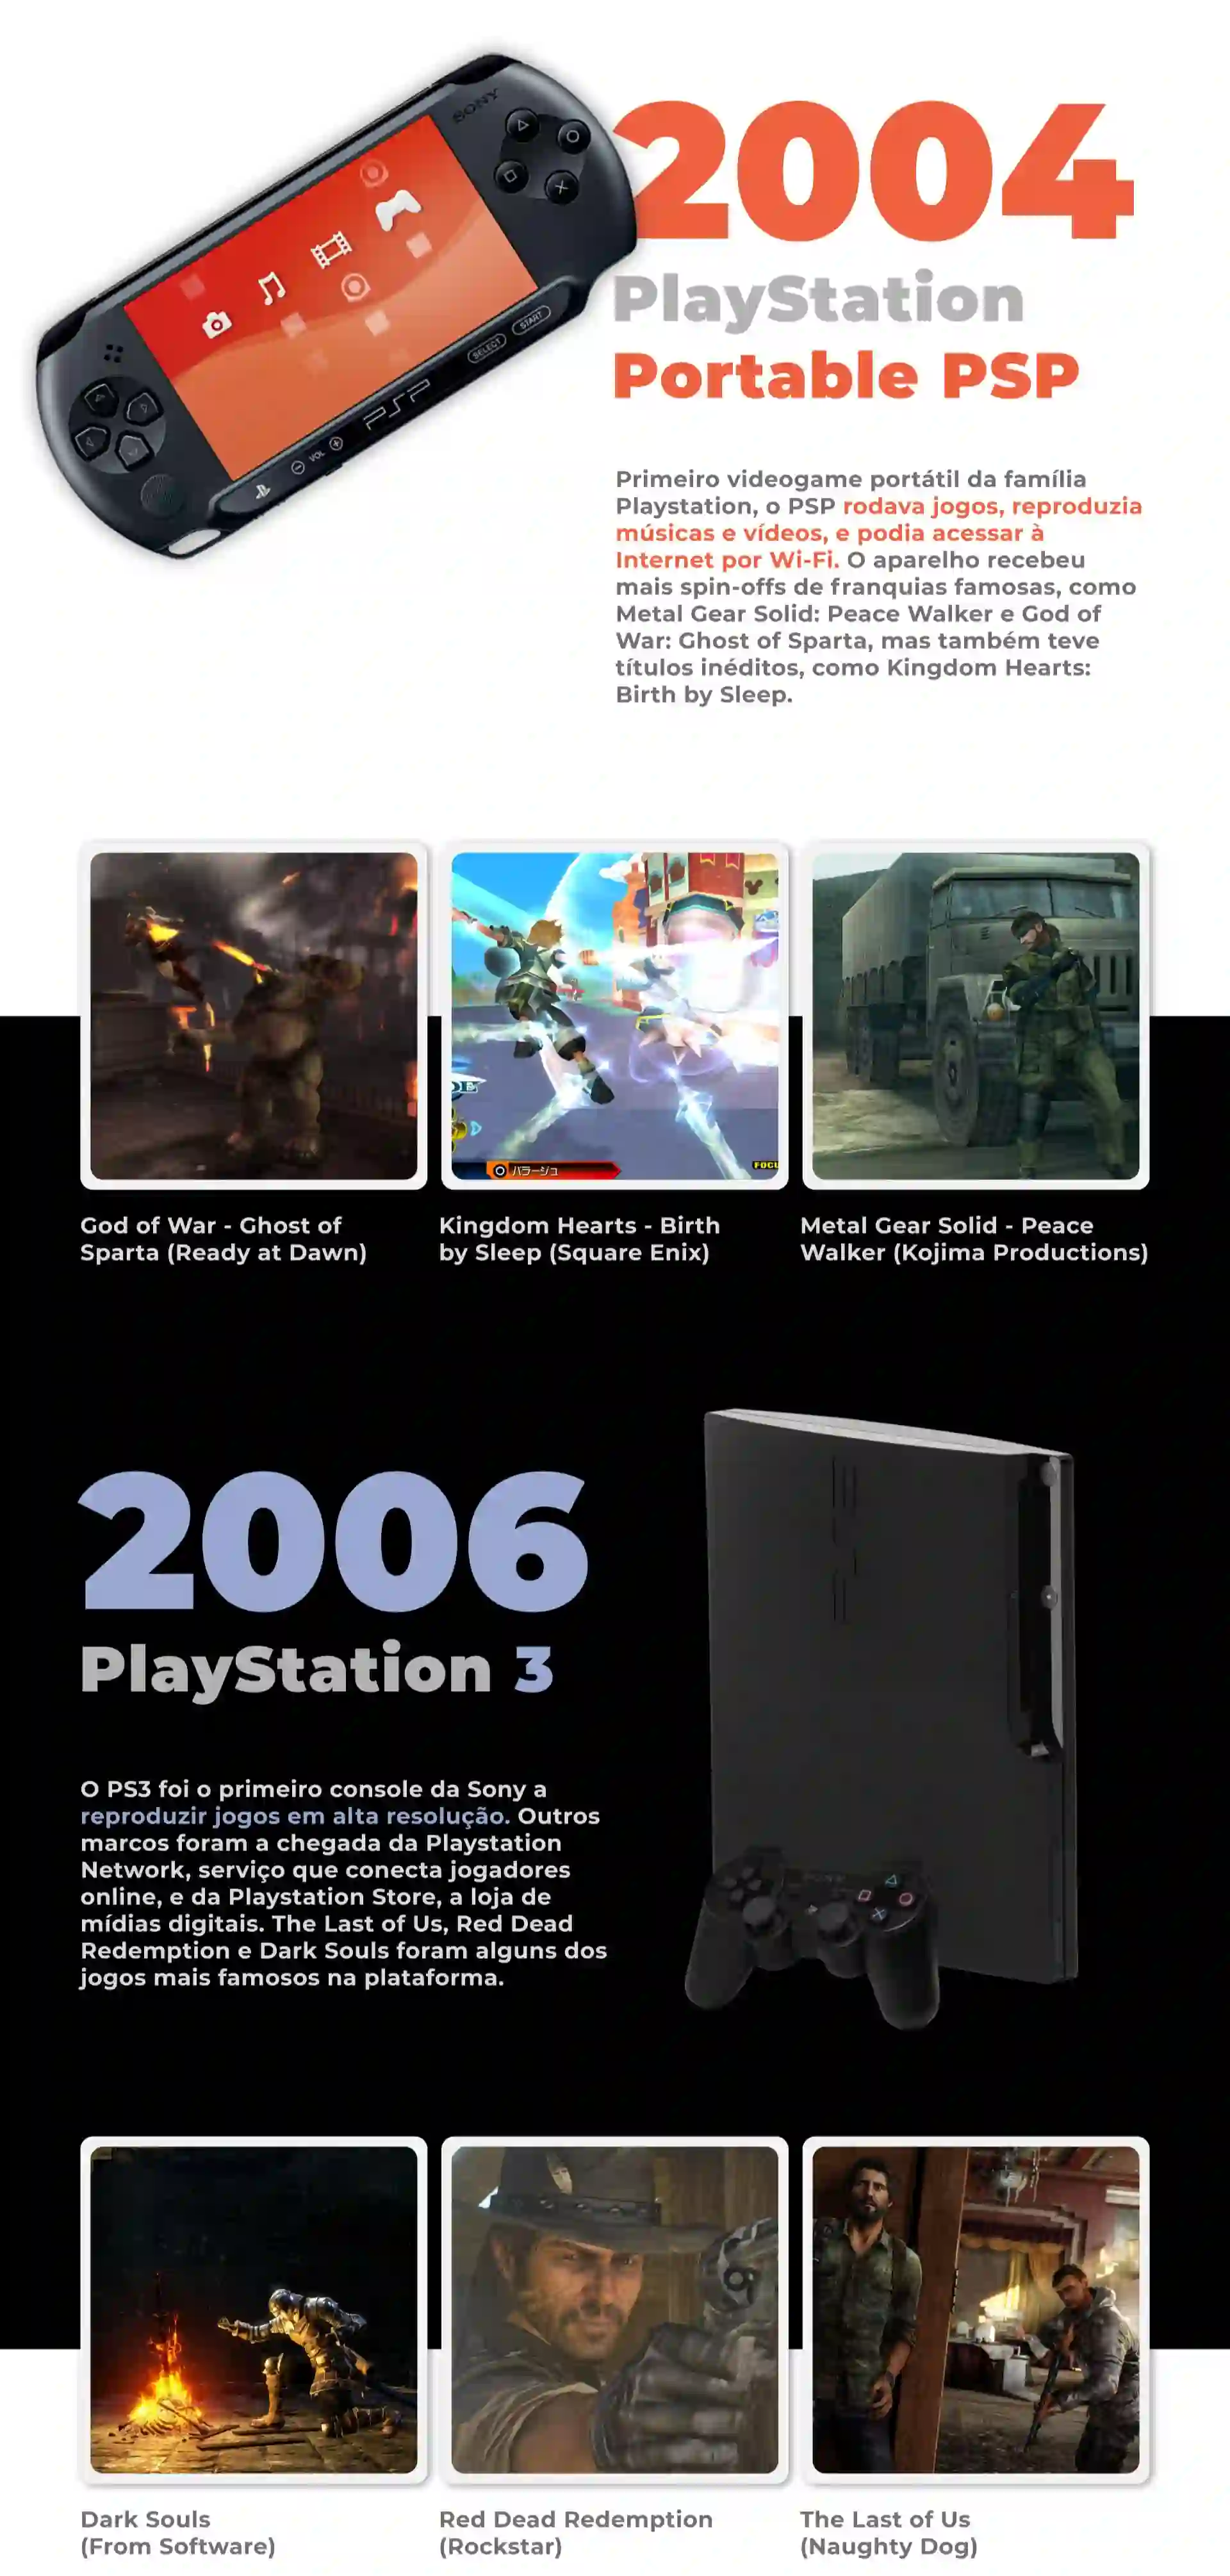 PS5] - Playstation 5 [ TÓPICO OFICIAL ], Page 5057